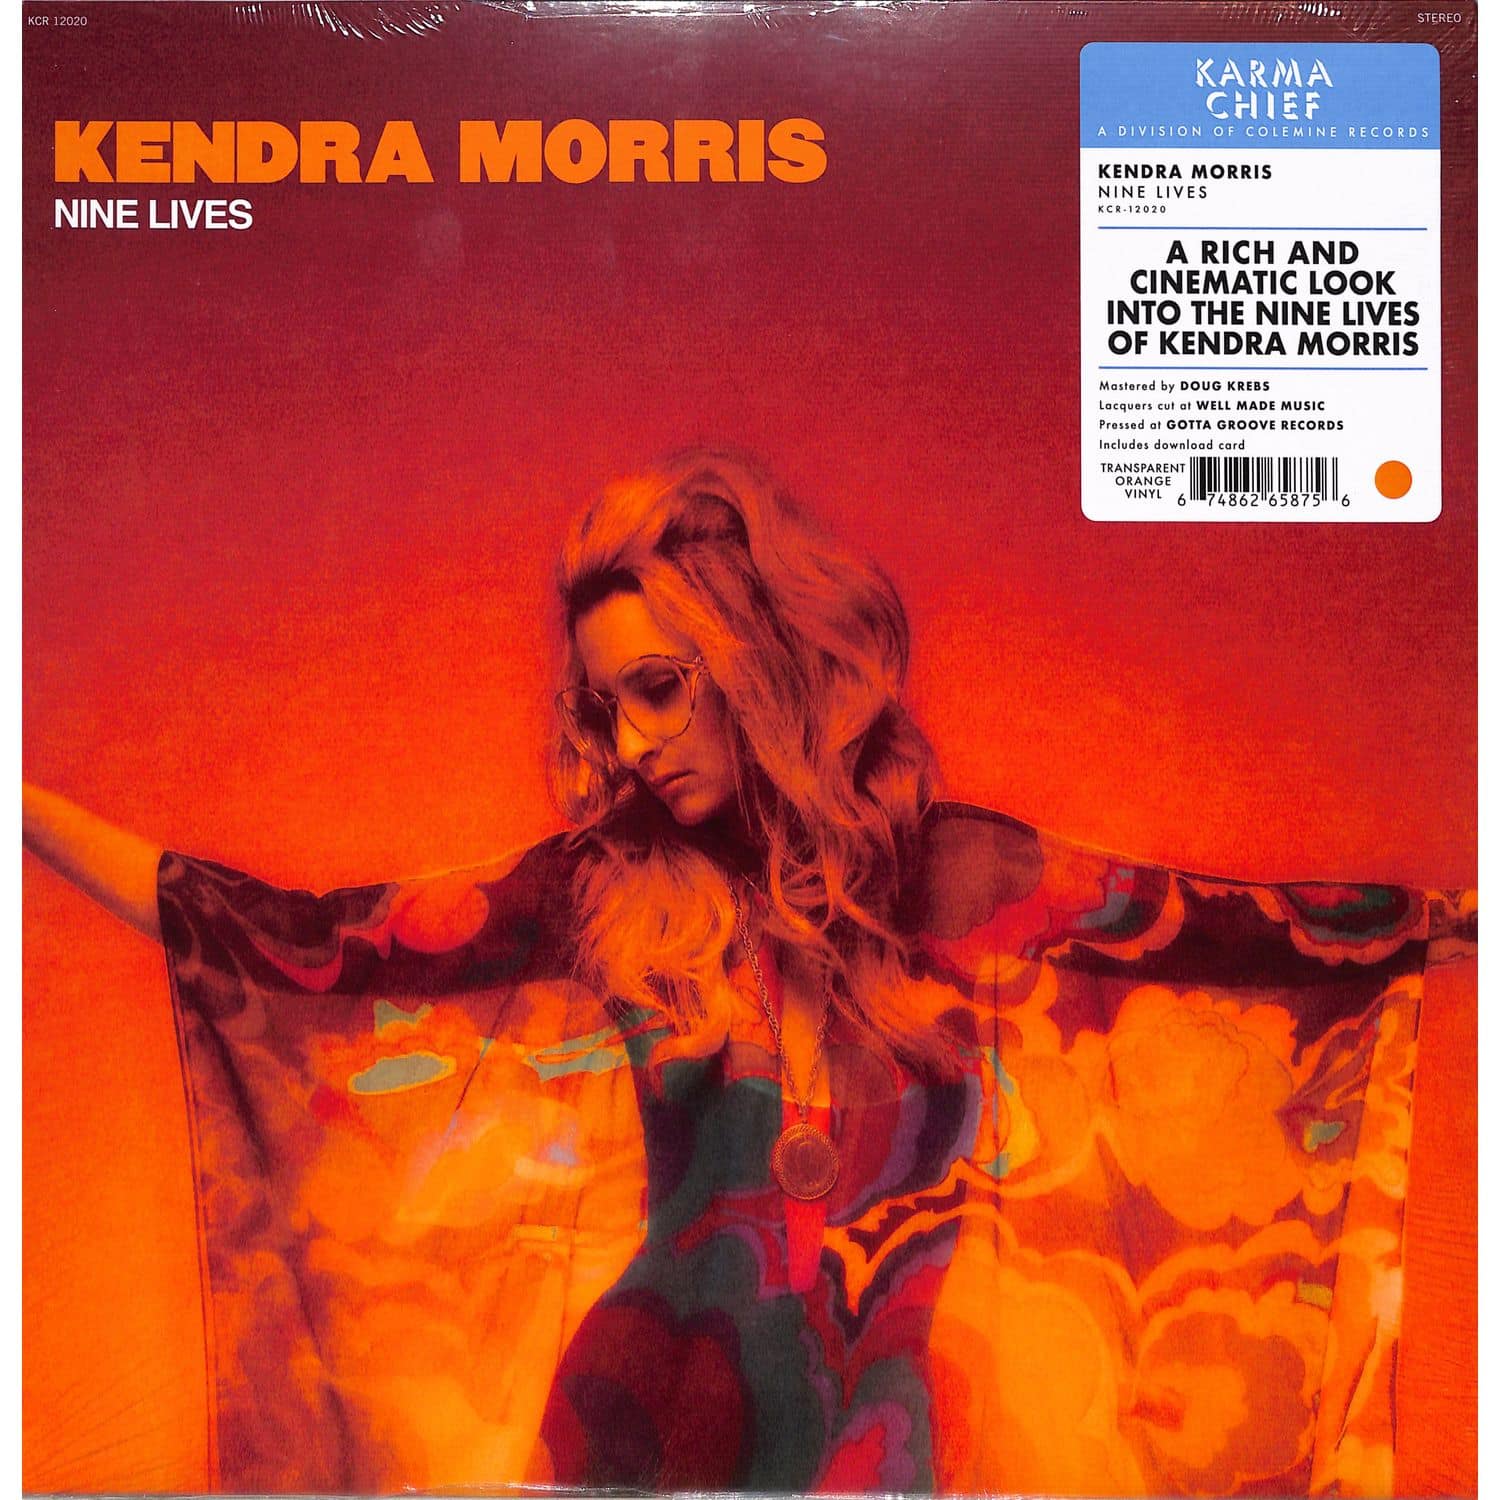 Kendra Morris - NINE LIVES LTD.TRANSLUCENT ORANGE VINYL- 